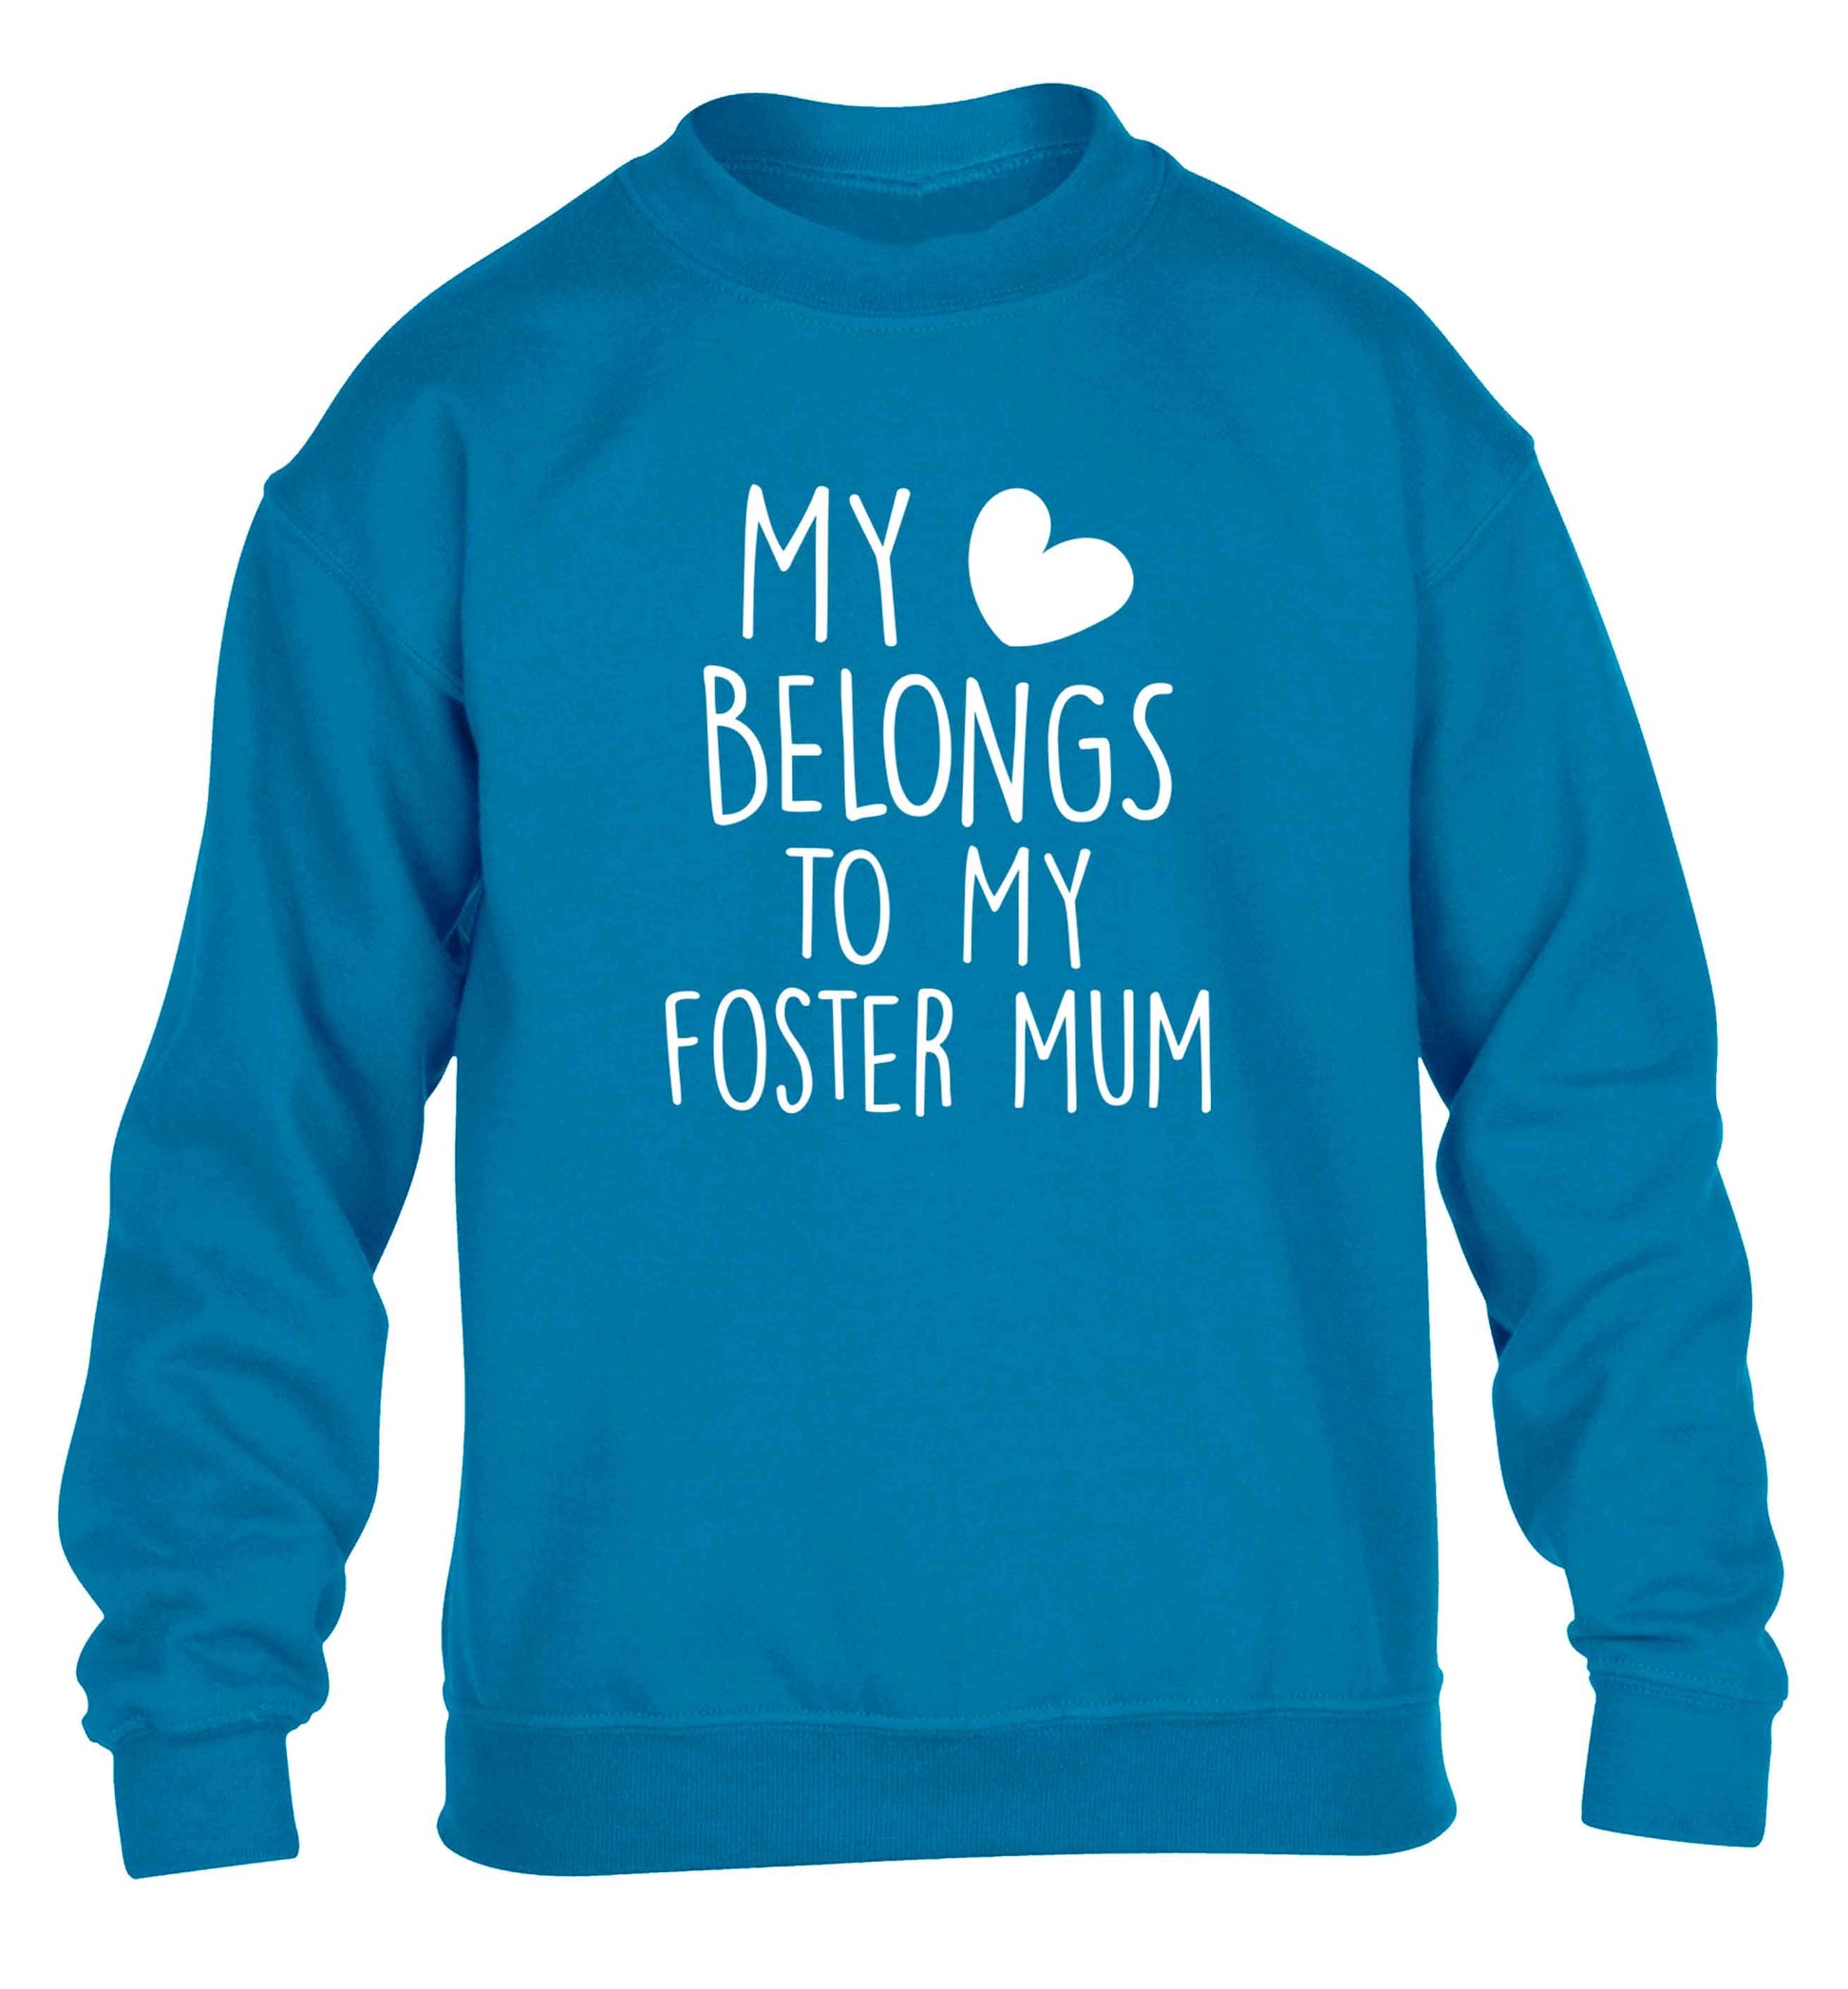 My heart belongs to my foster mum children's blue sweater 12-13 Years